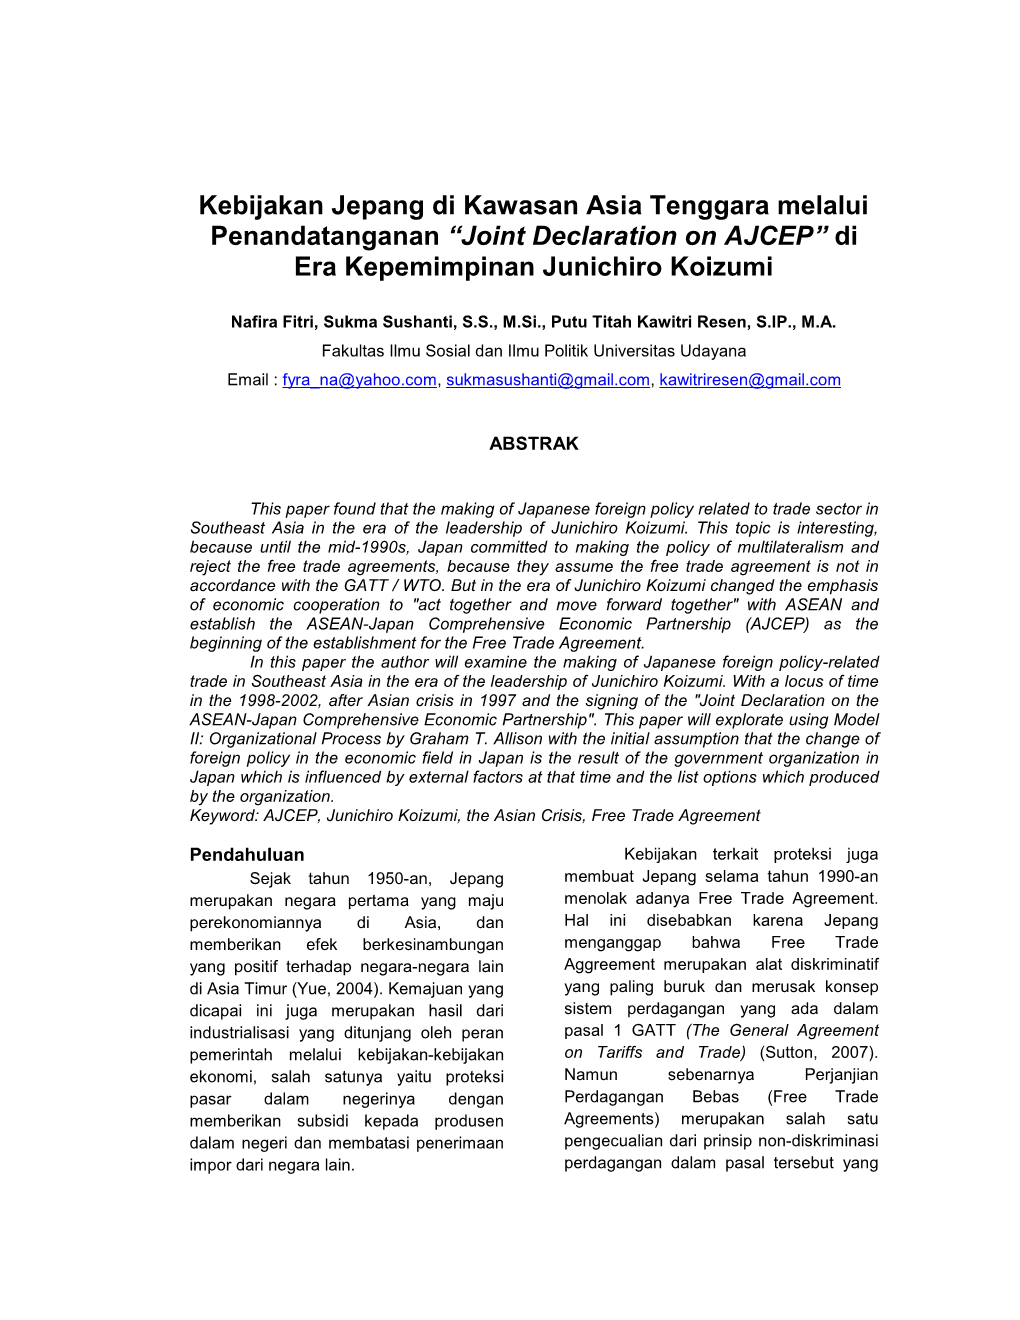 Kebijakan Jepang Di Kawasan Asia Tenggara Melalui Penandatanganan “Joint Declaration on AJCEP” Di Era Kepemimpinan Junichiro Koizumi